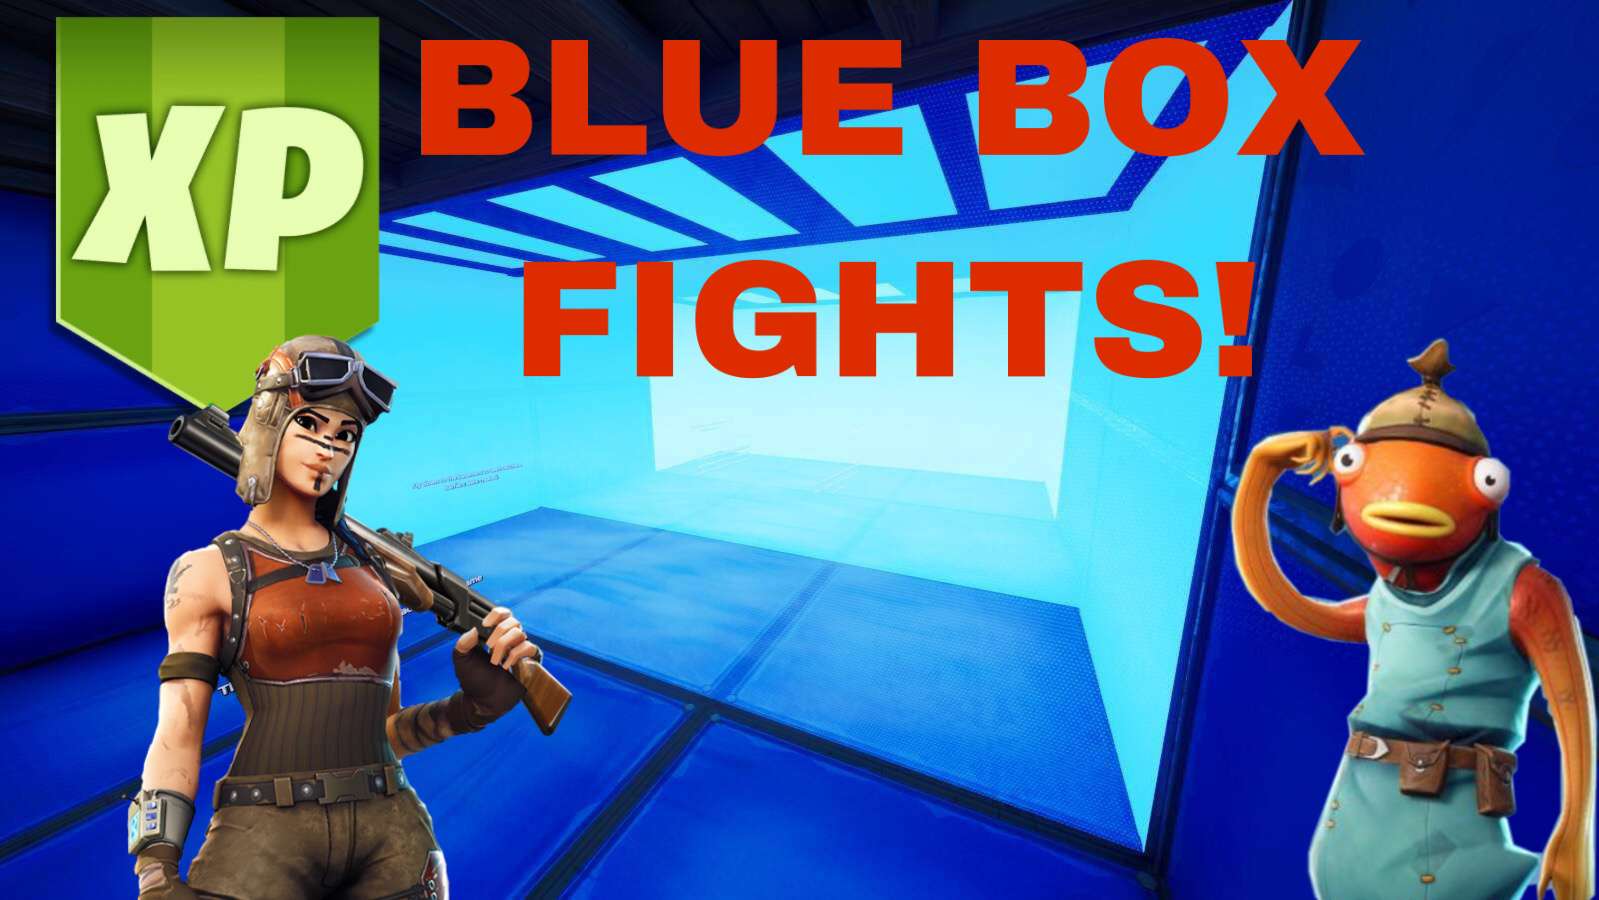 BLUE BOX FIGHTS!